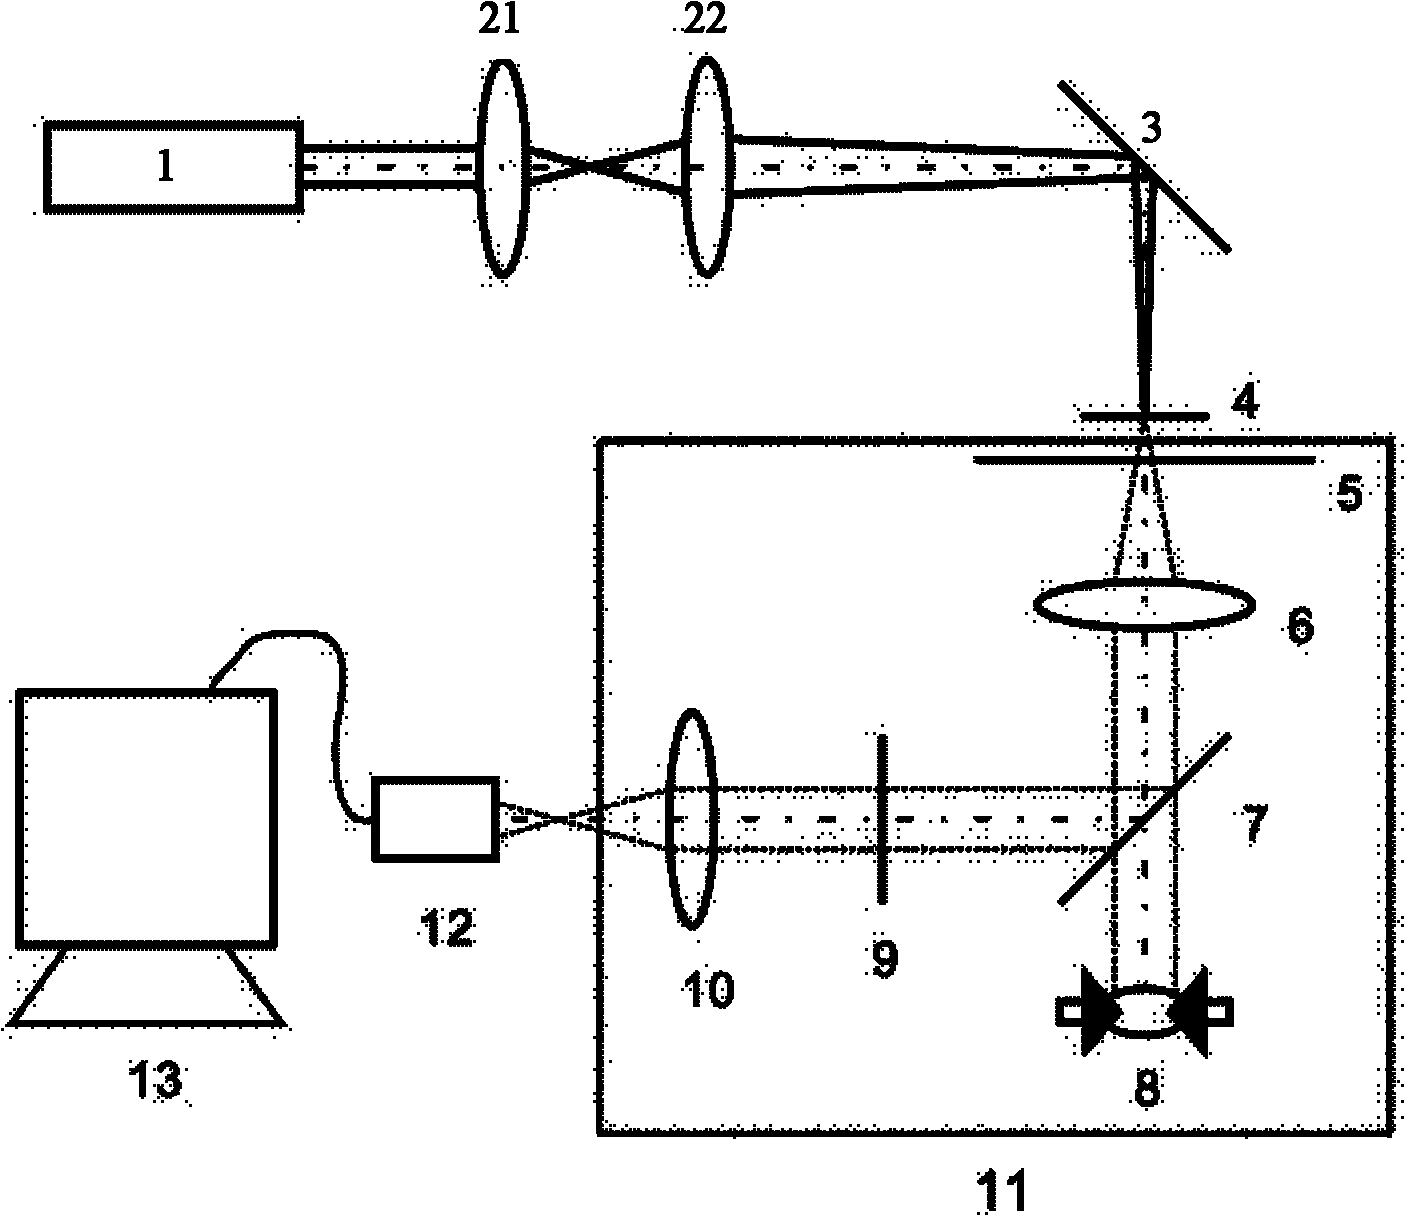 Novel holographic optical tweezers system based on Talbot effect